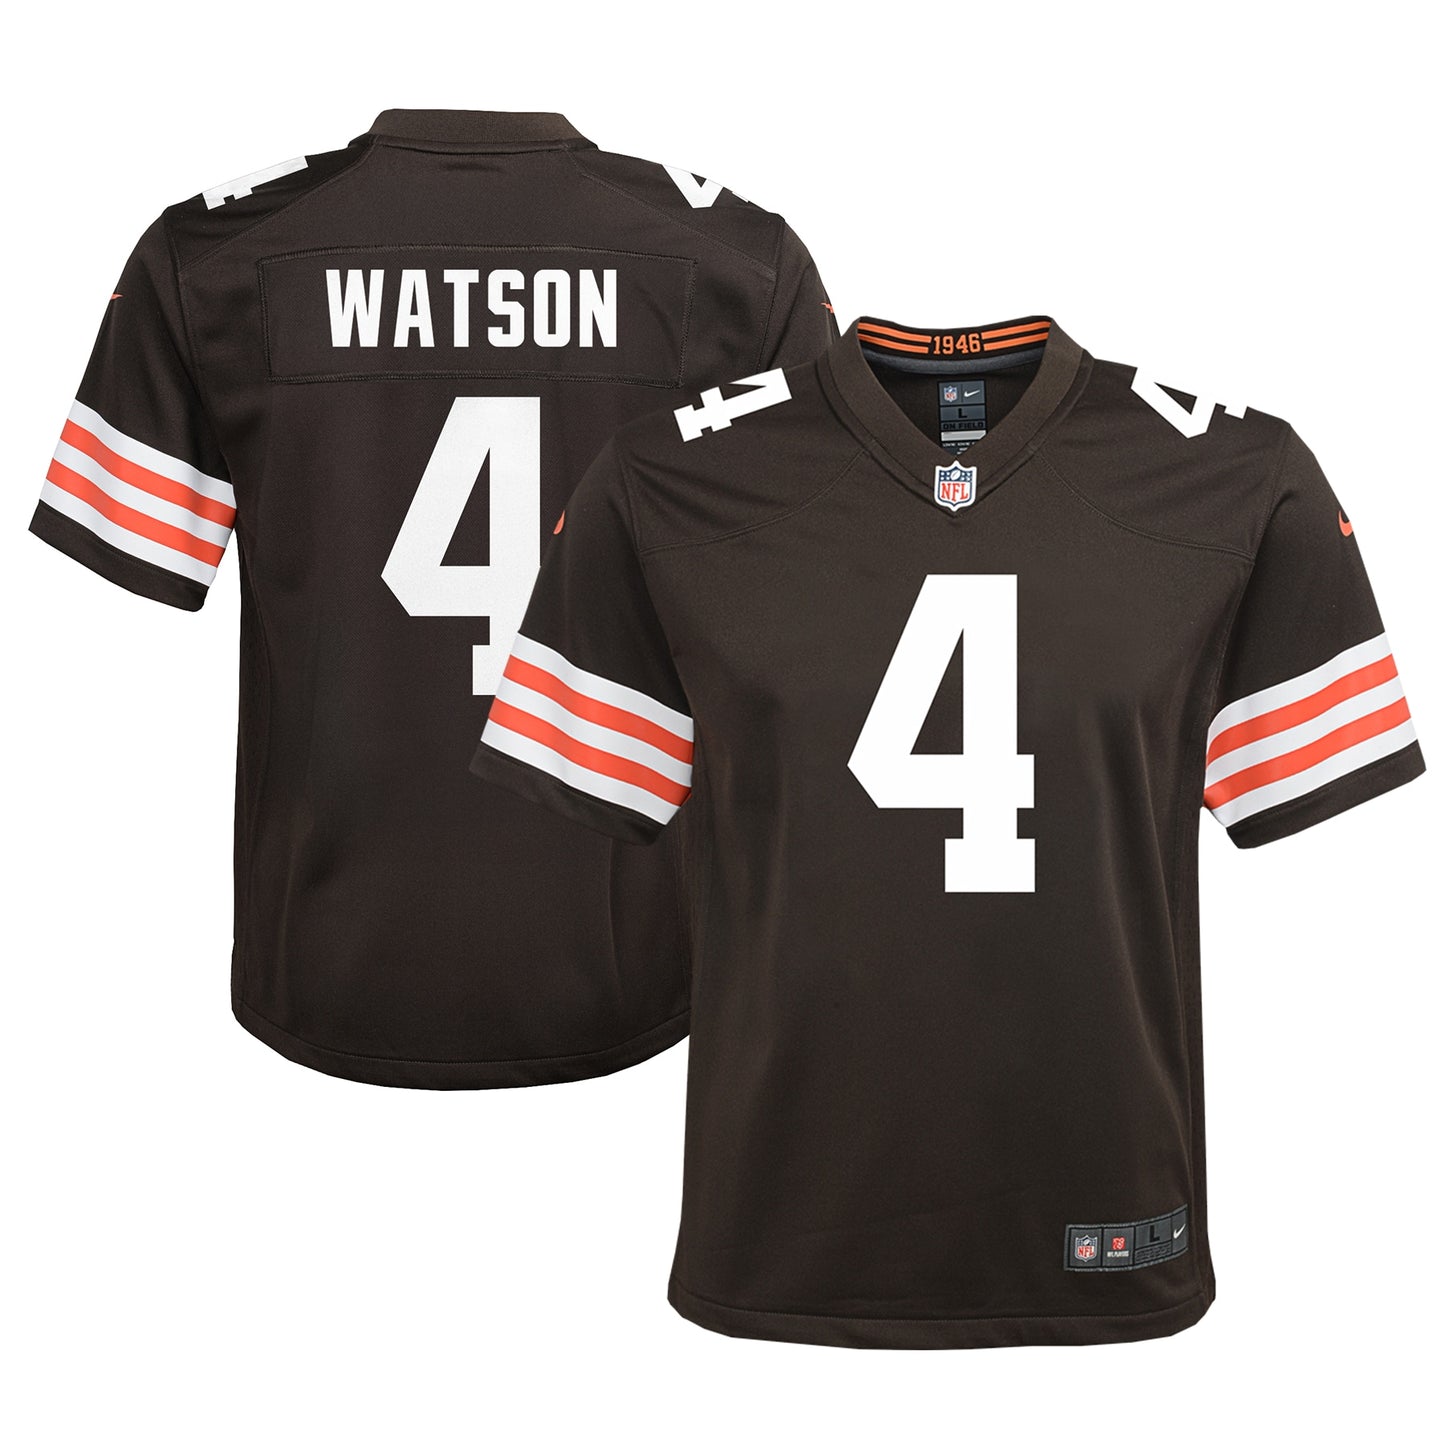 Deshaun Watson Cleveland Browns Nike Youth Game Jersey - Brown